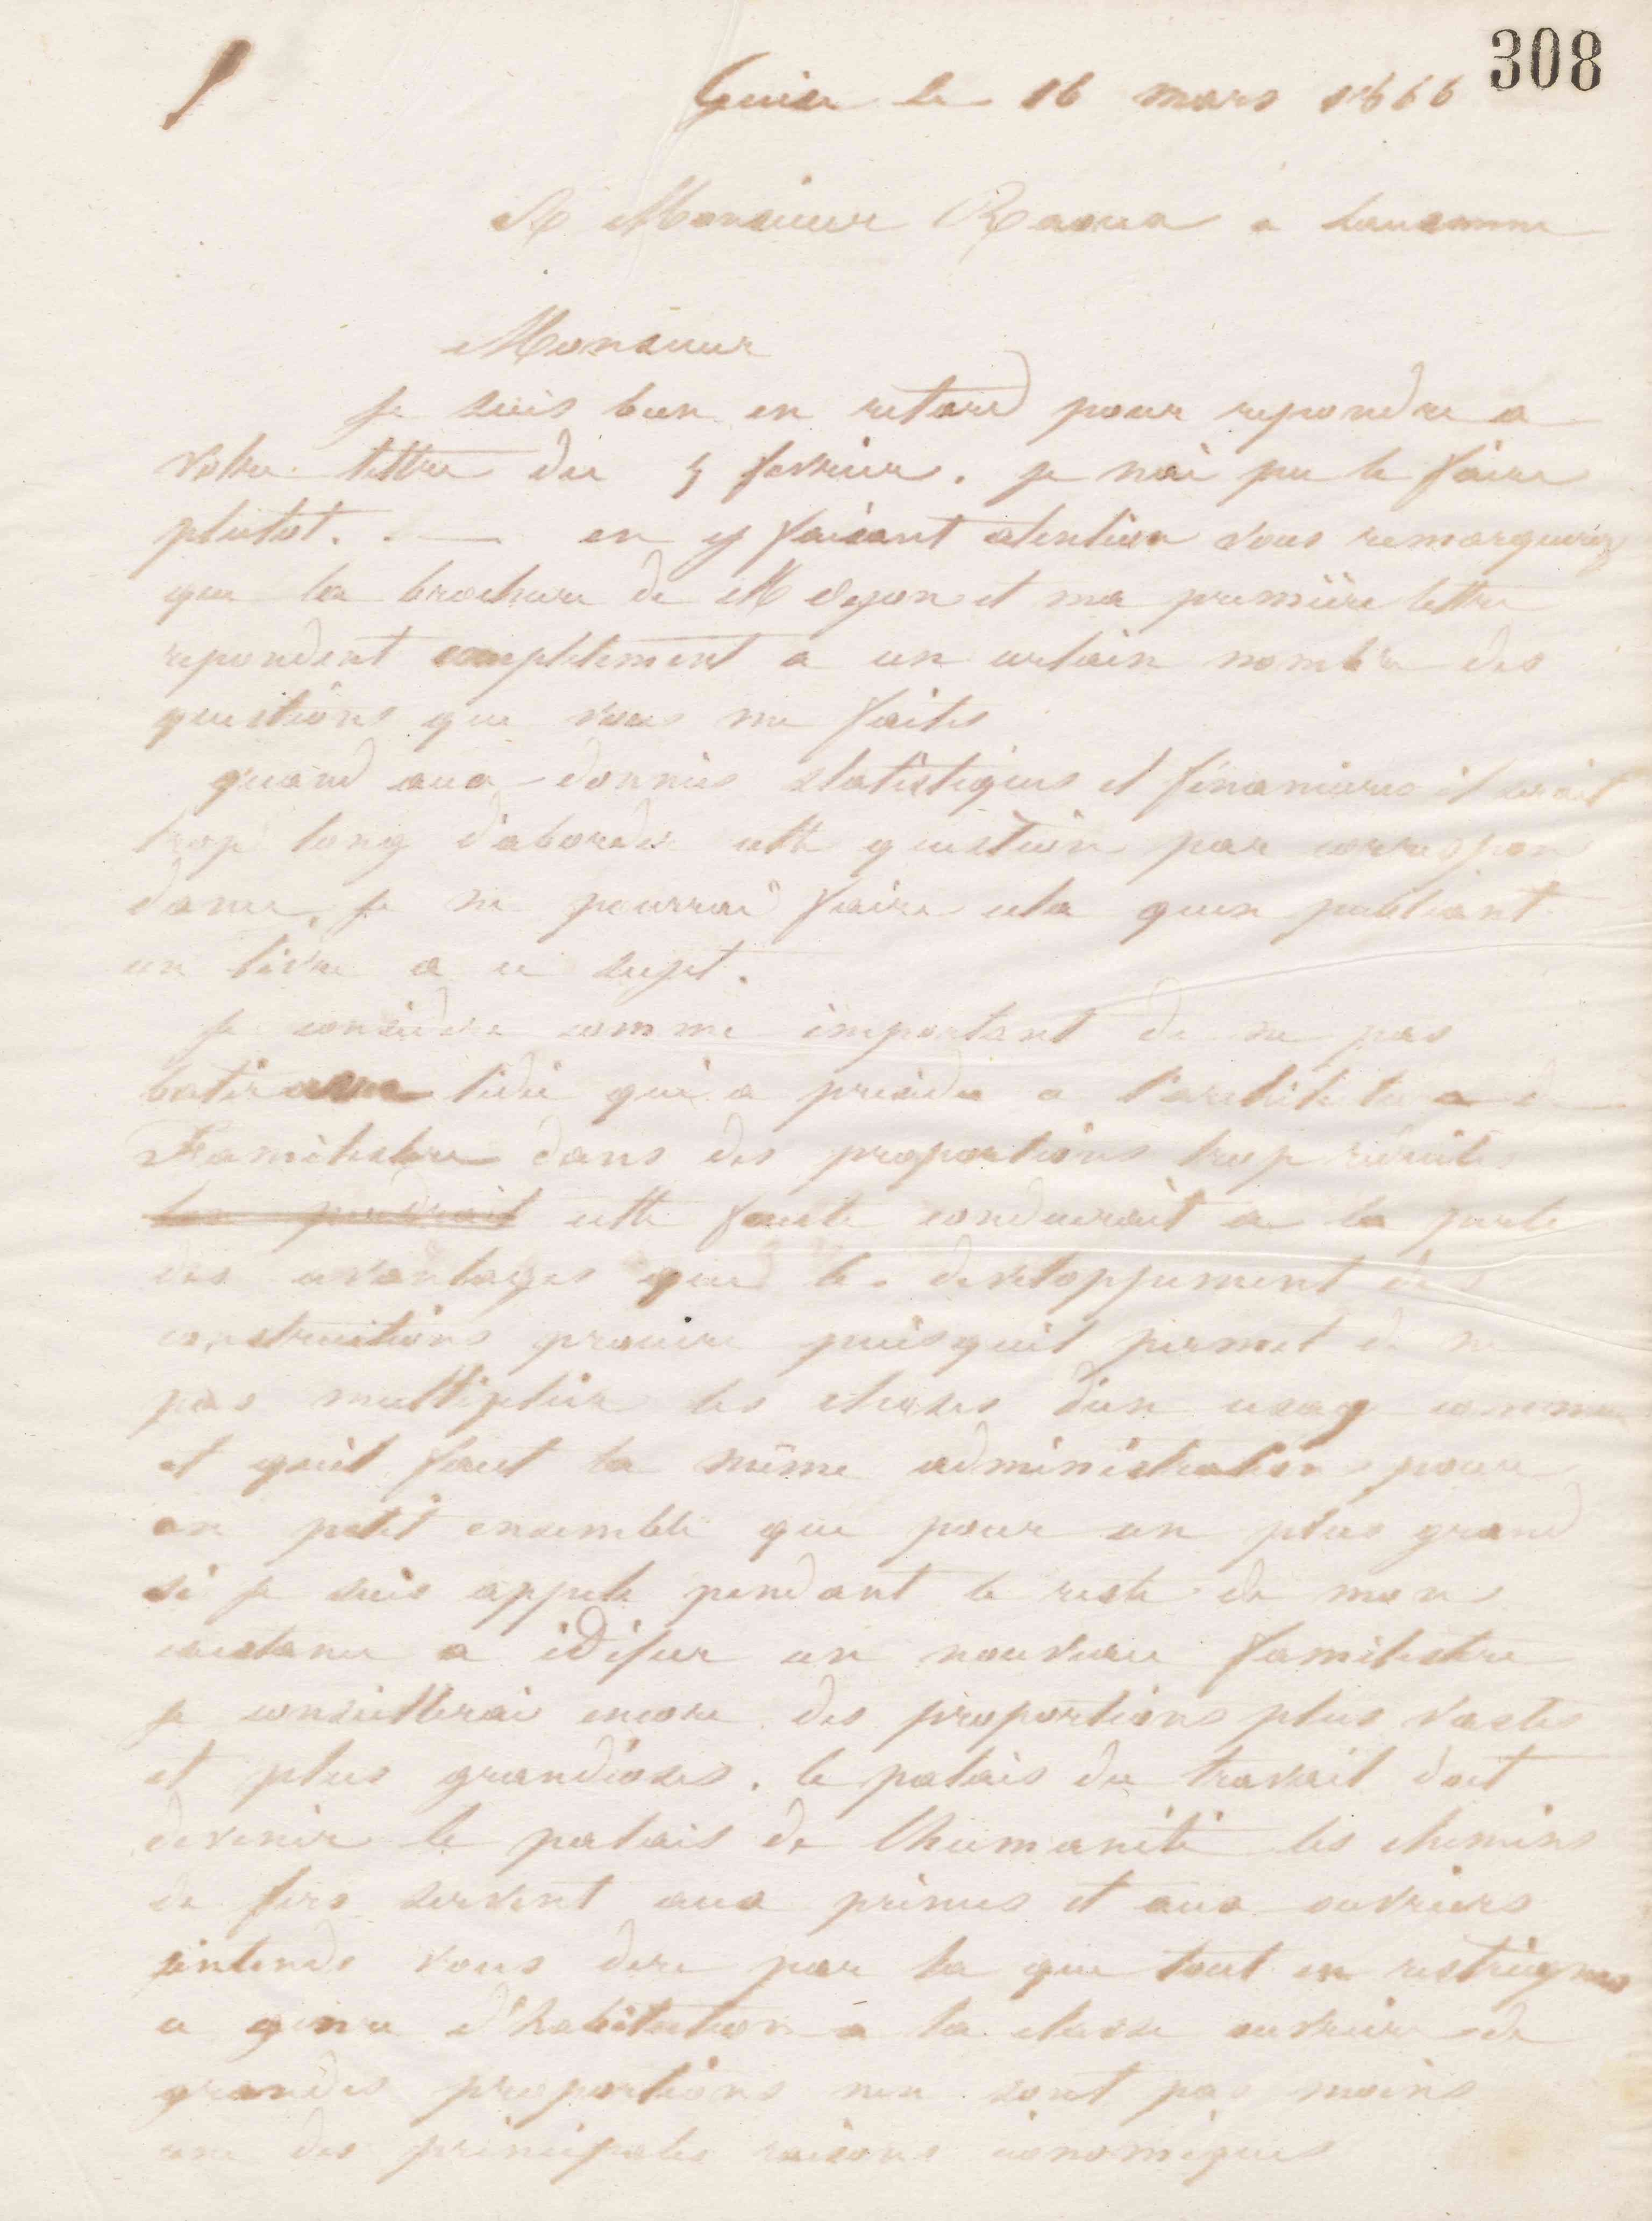 Jean-Baptiste André Godin à Édouard Raoux, 16 mars 1866